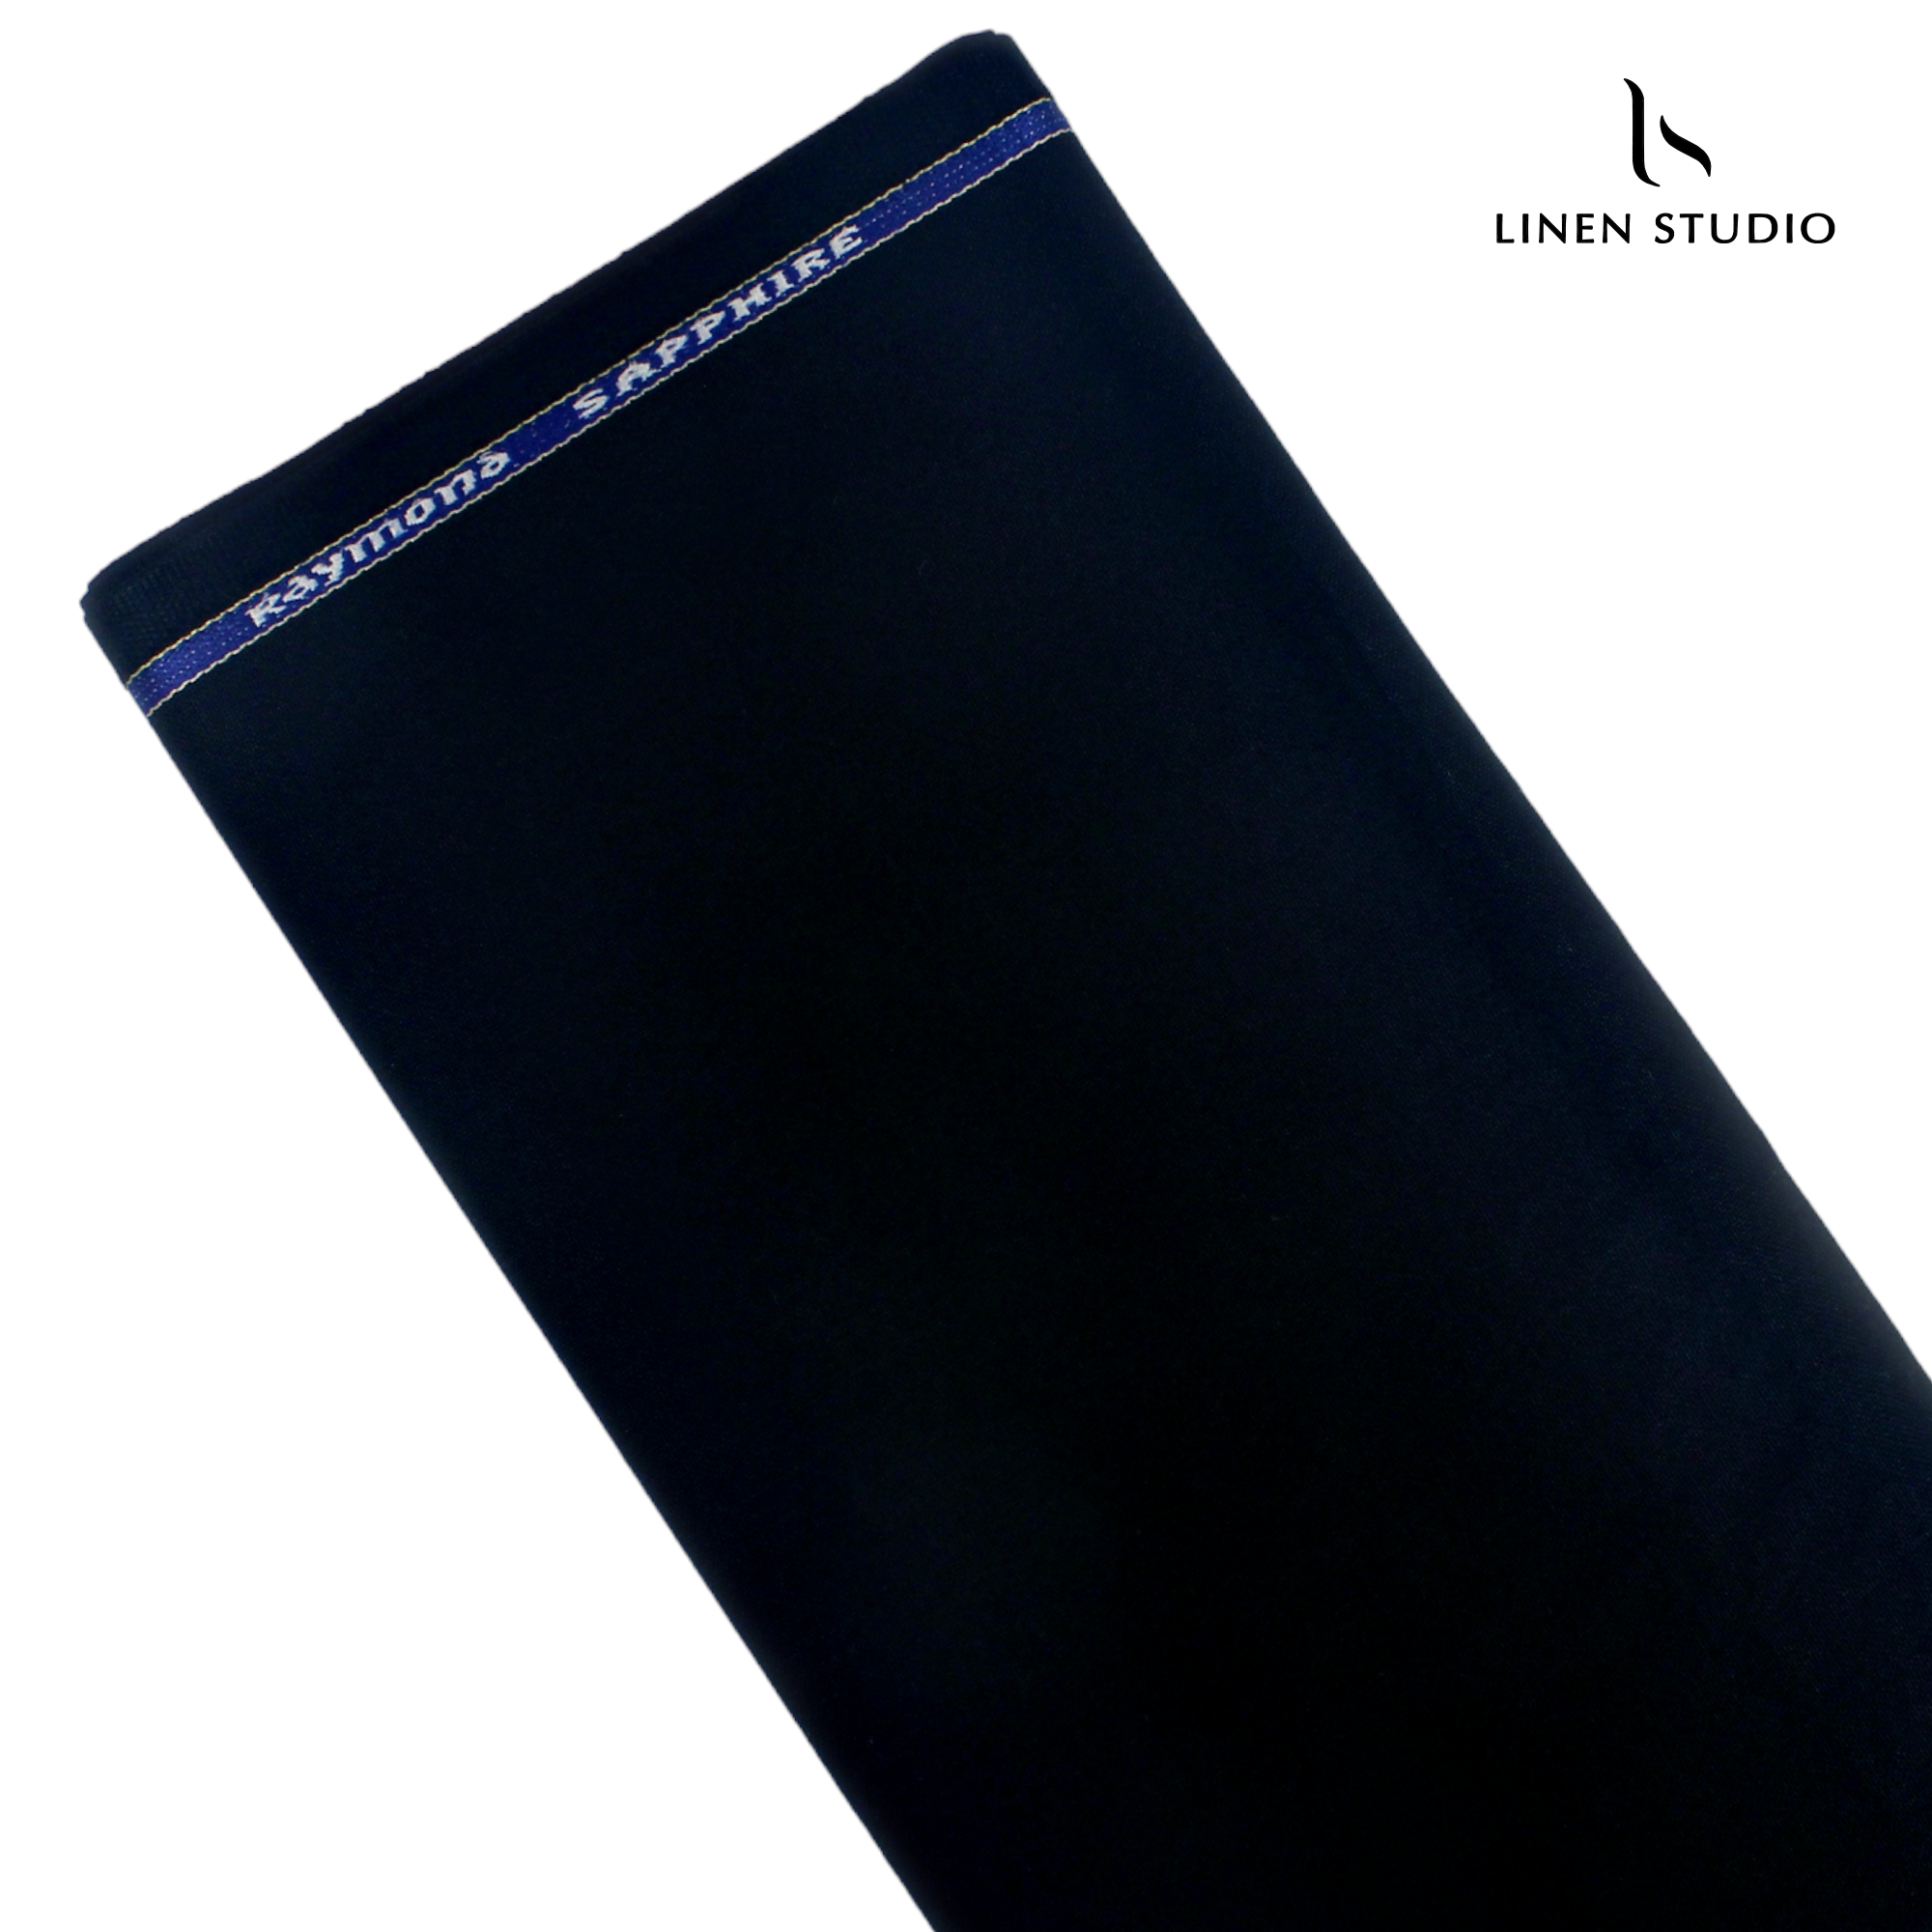 36% OFF on Raymond Deep Blue Trouser Fabric on Snapdeal | PaisaWapas.com